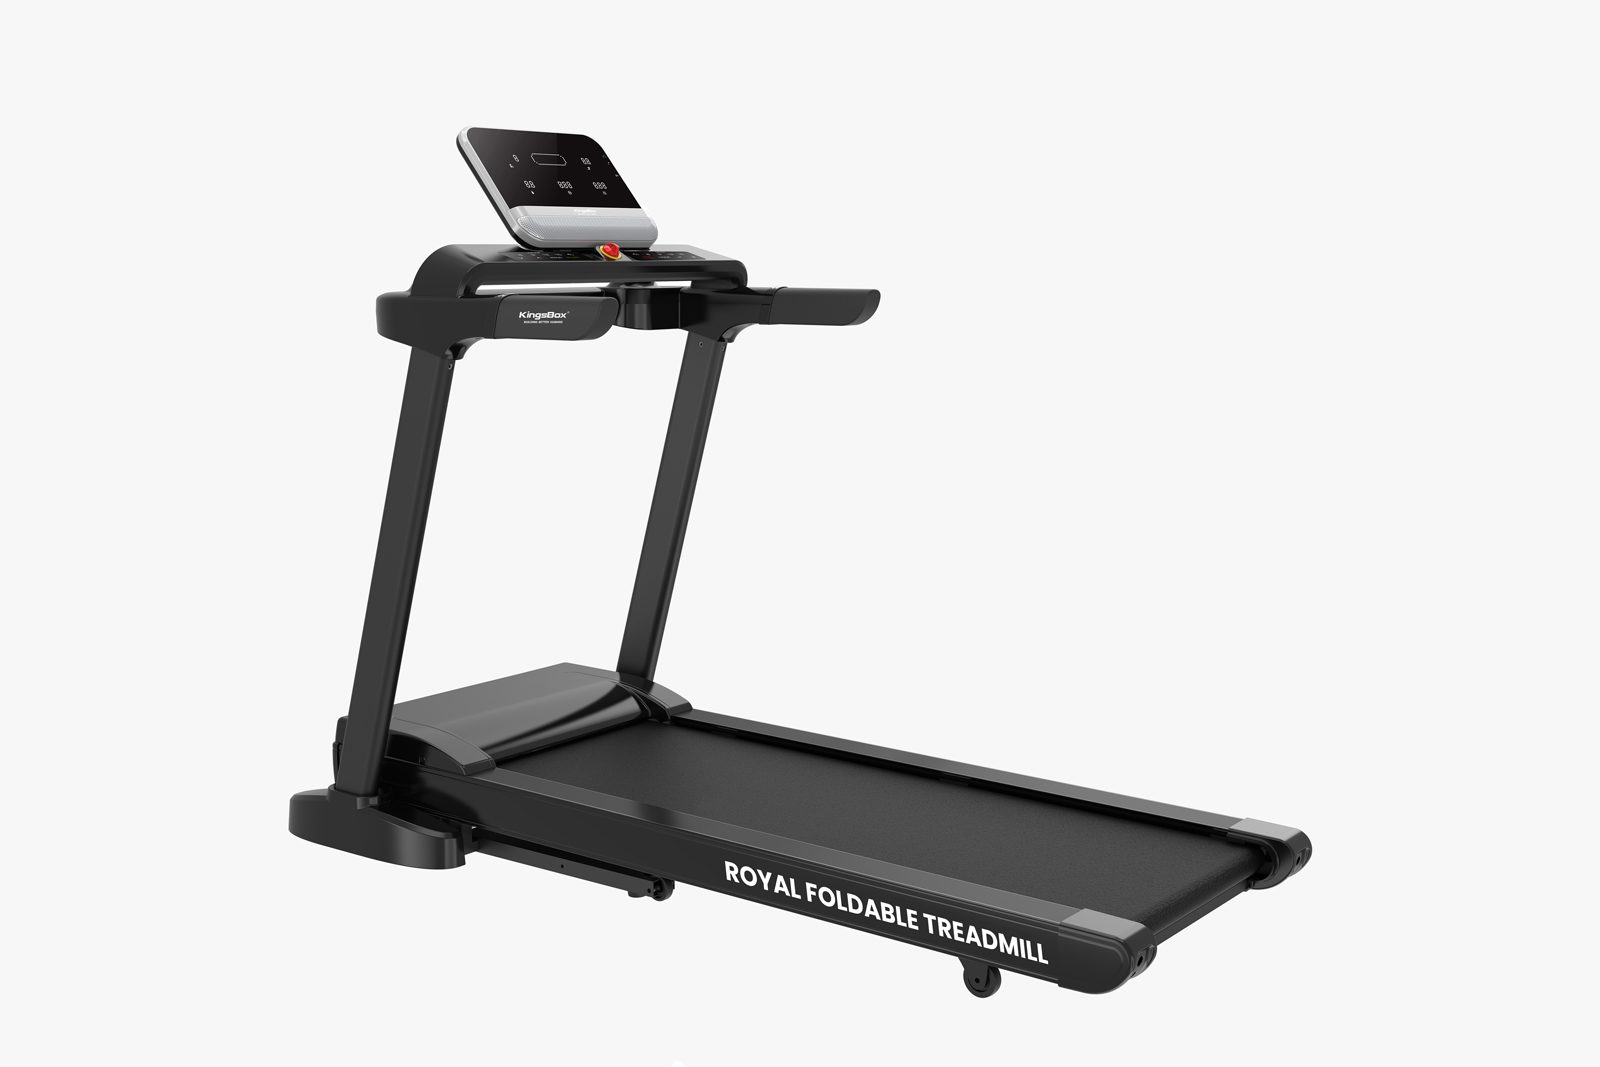 Begagnad - Royal Foldable Treadmill | KingsBox